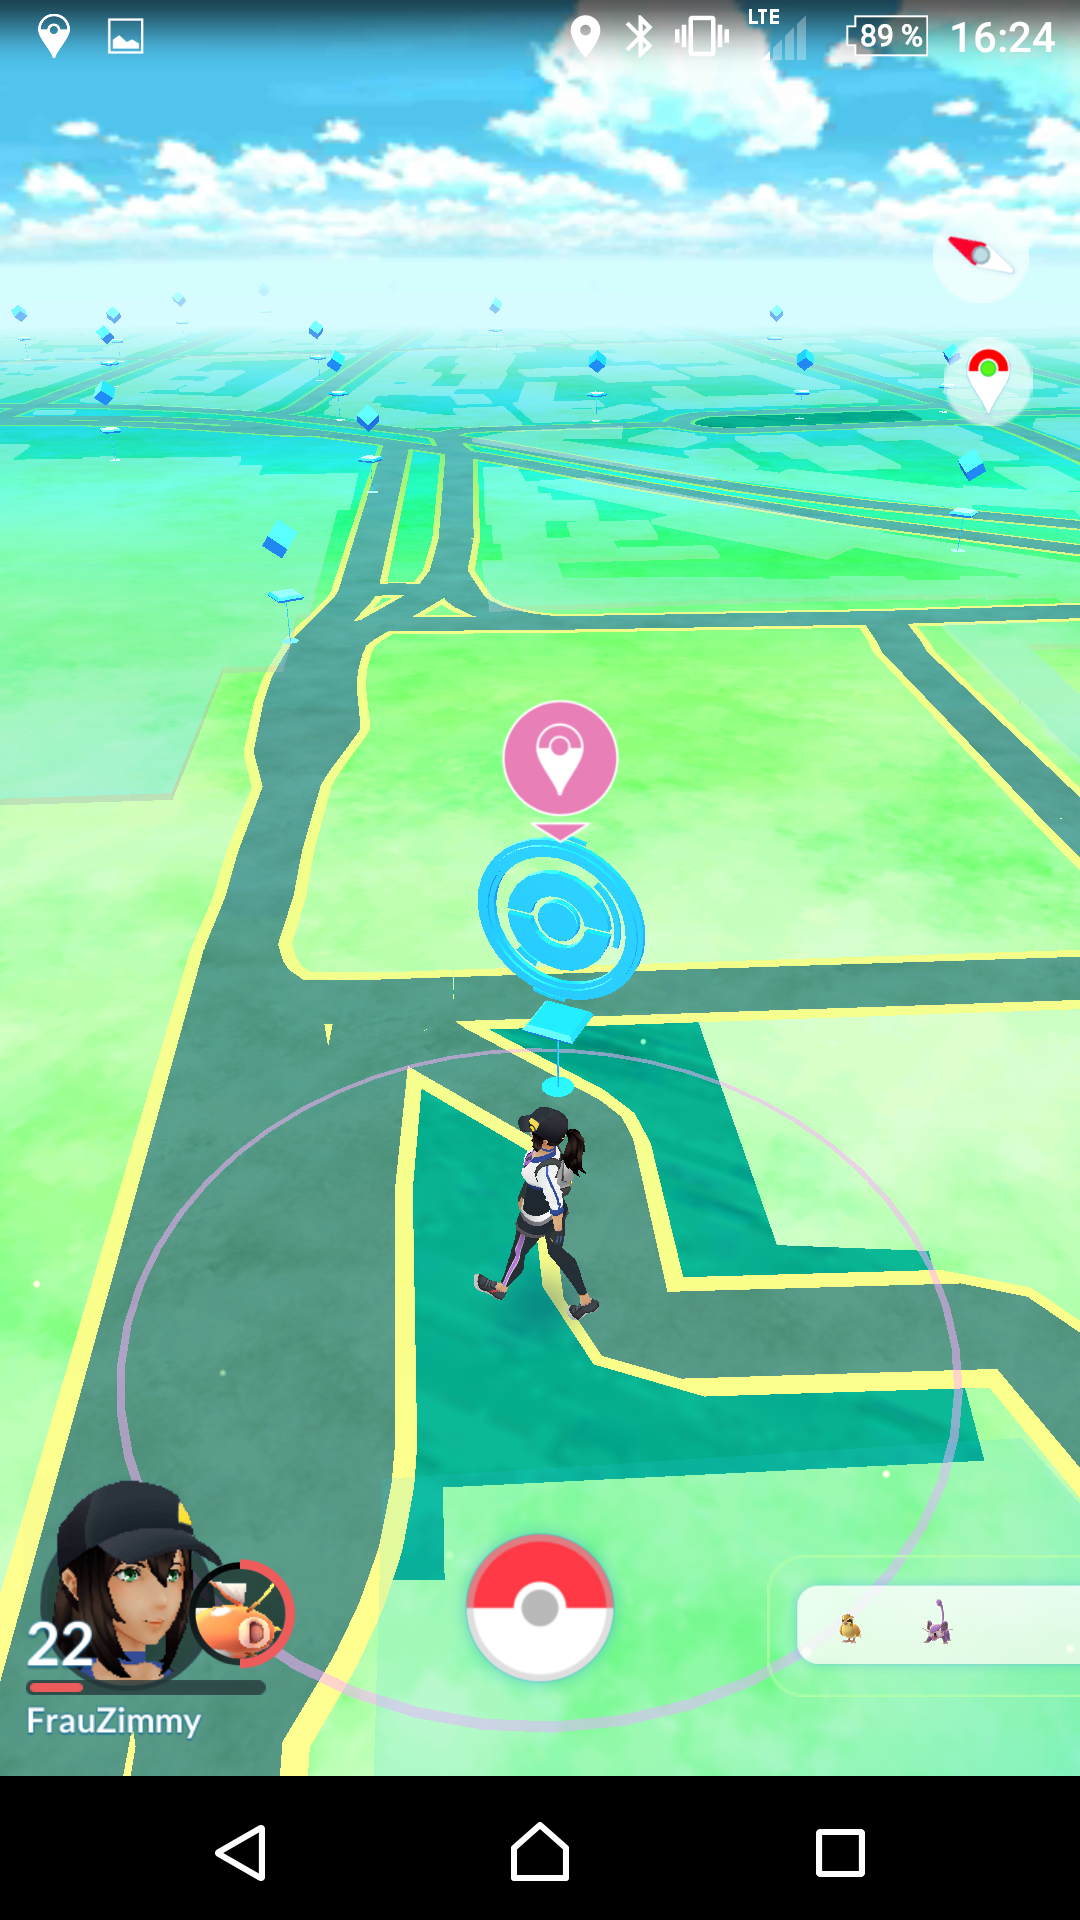 Pokémon GO Plus registriert einen Pokéstop